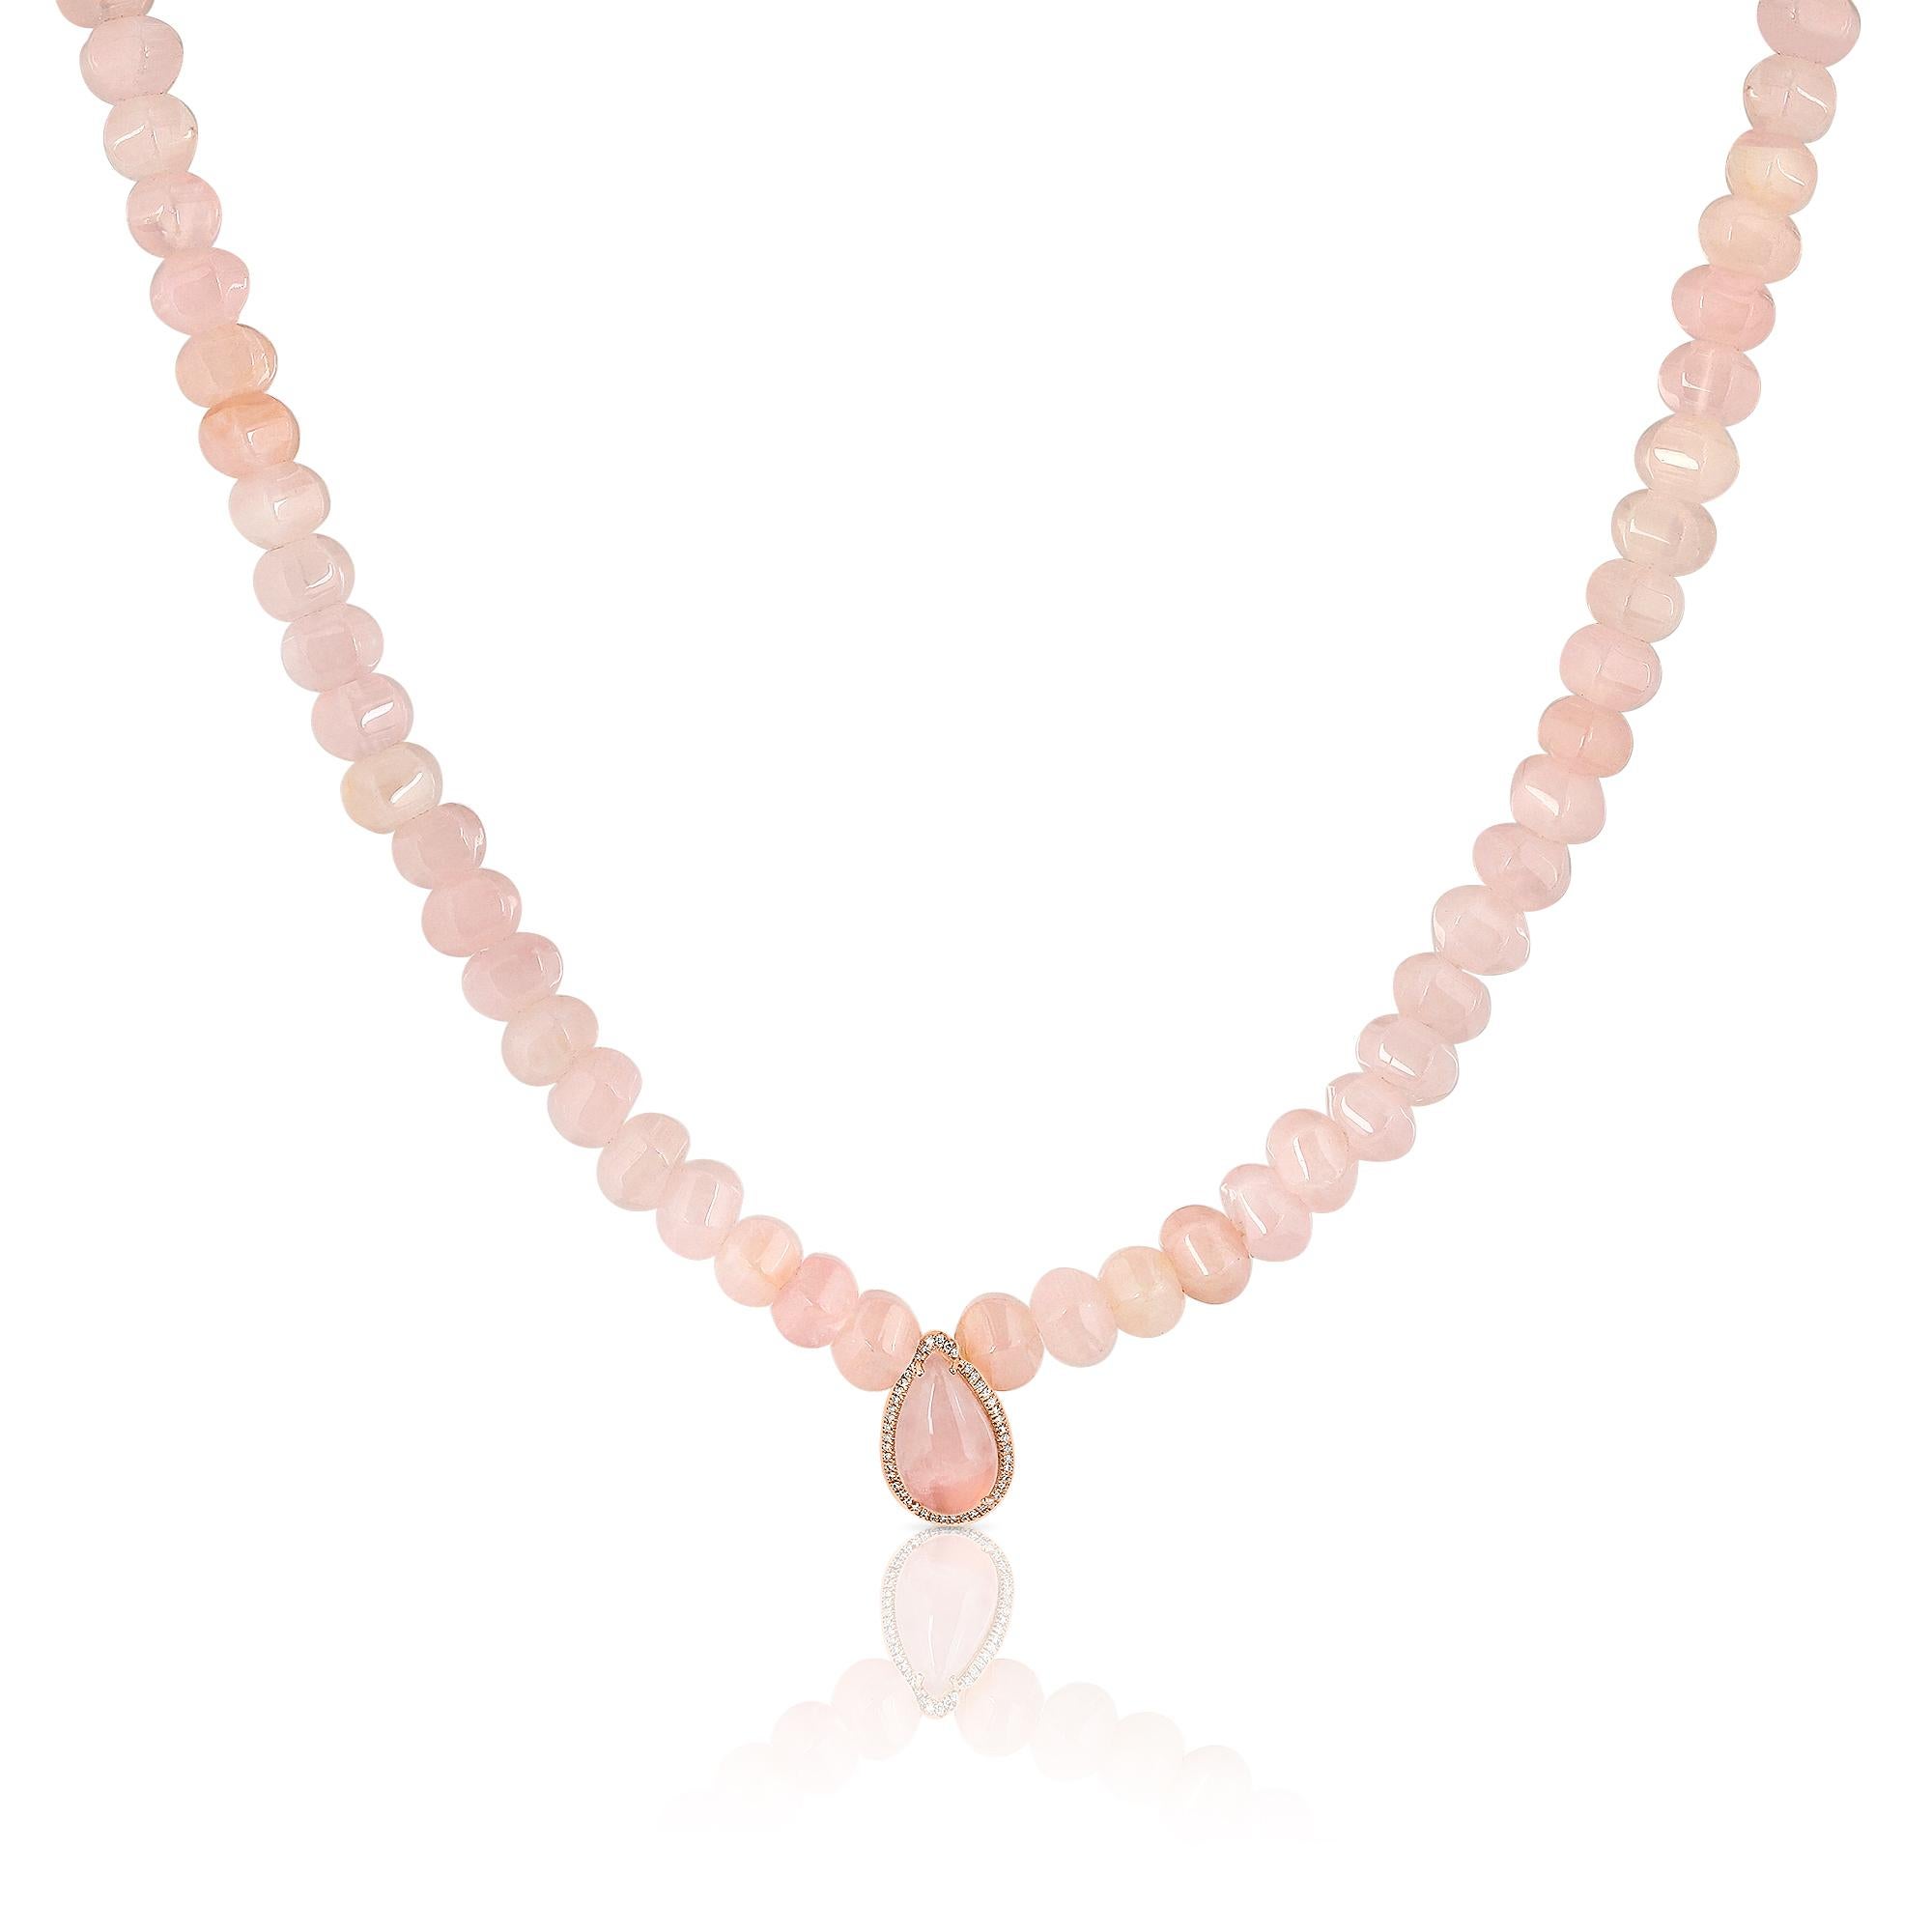 beautiful necklace with pear shape rose quartz 6.97 carat set with 0.19 carat brilliant round diamonds

